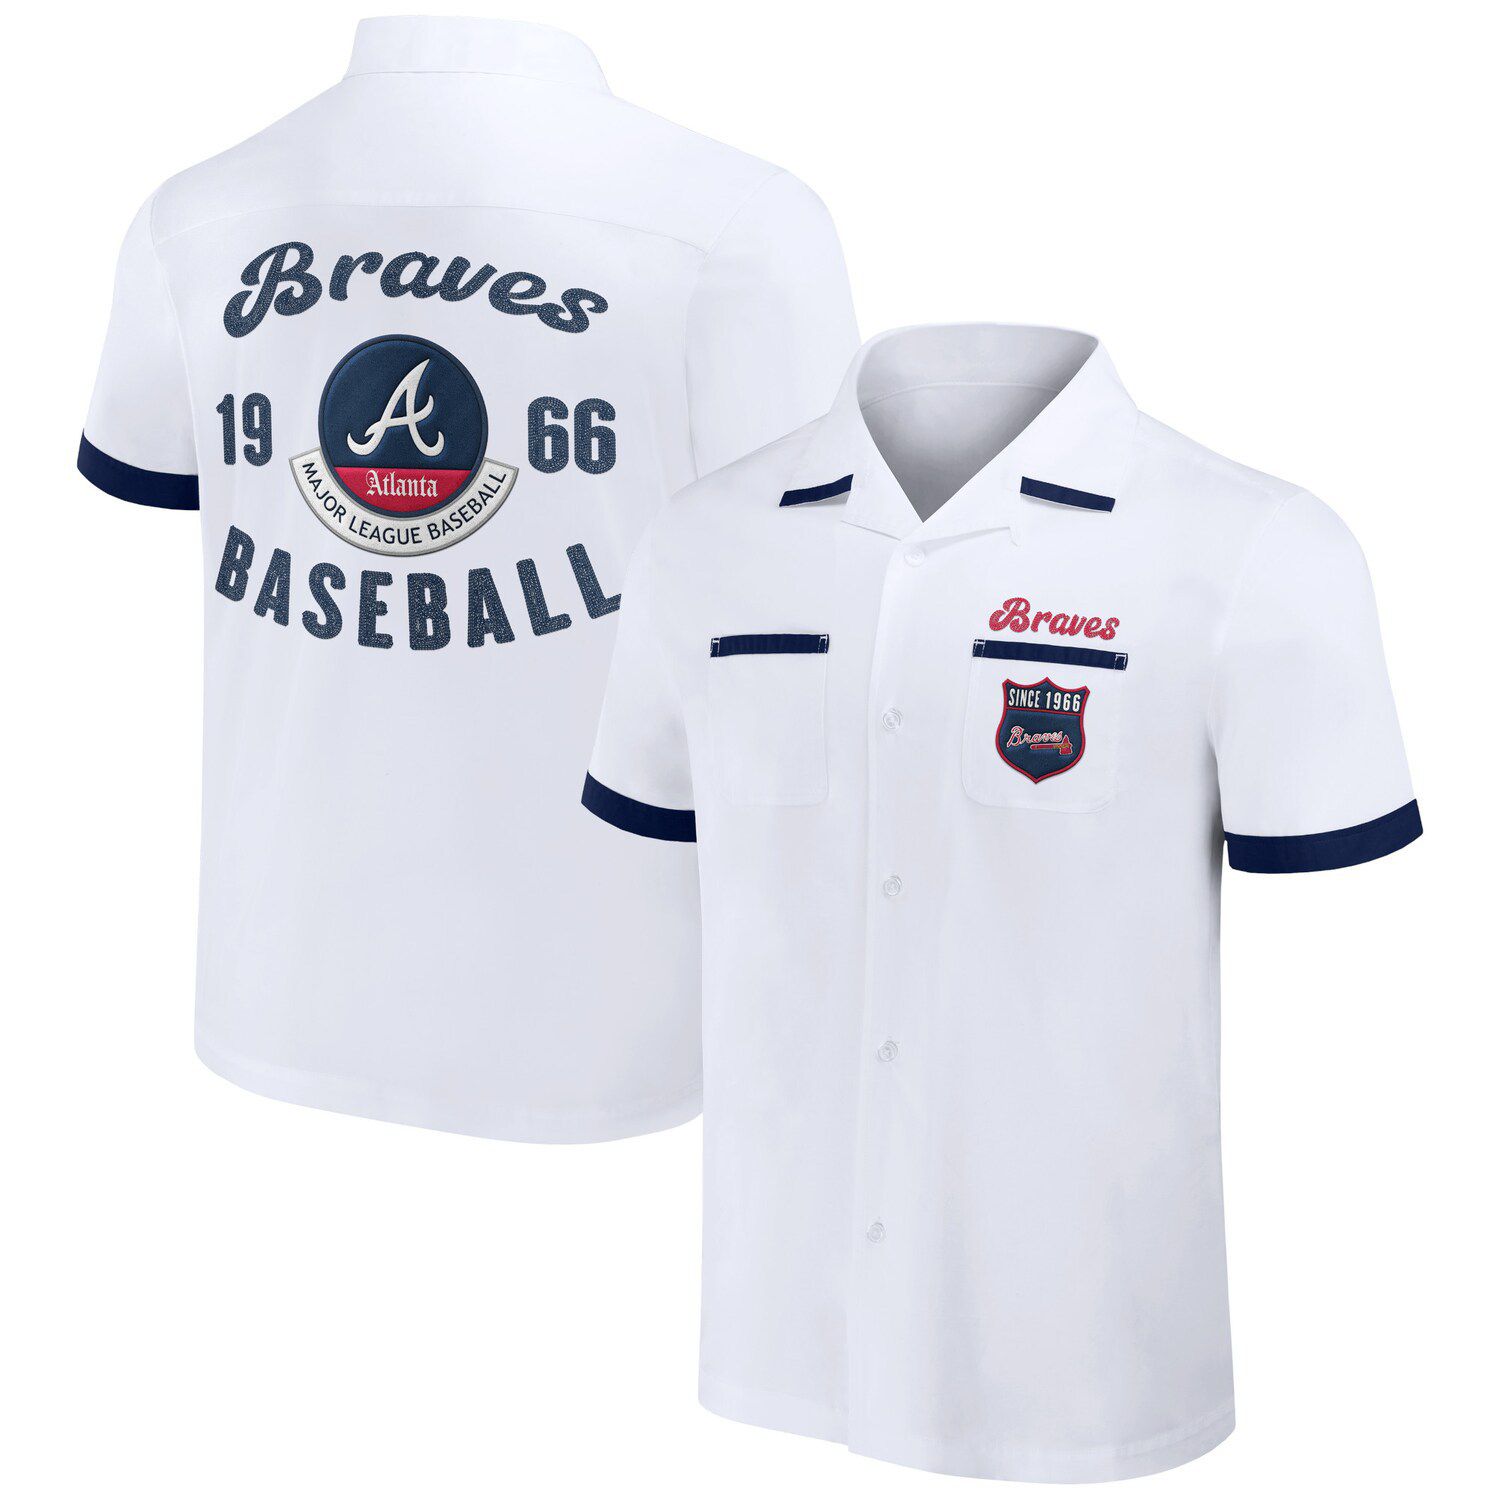 New York Yankees retro Bowling Shirt 